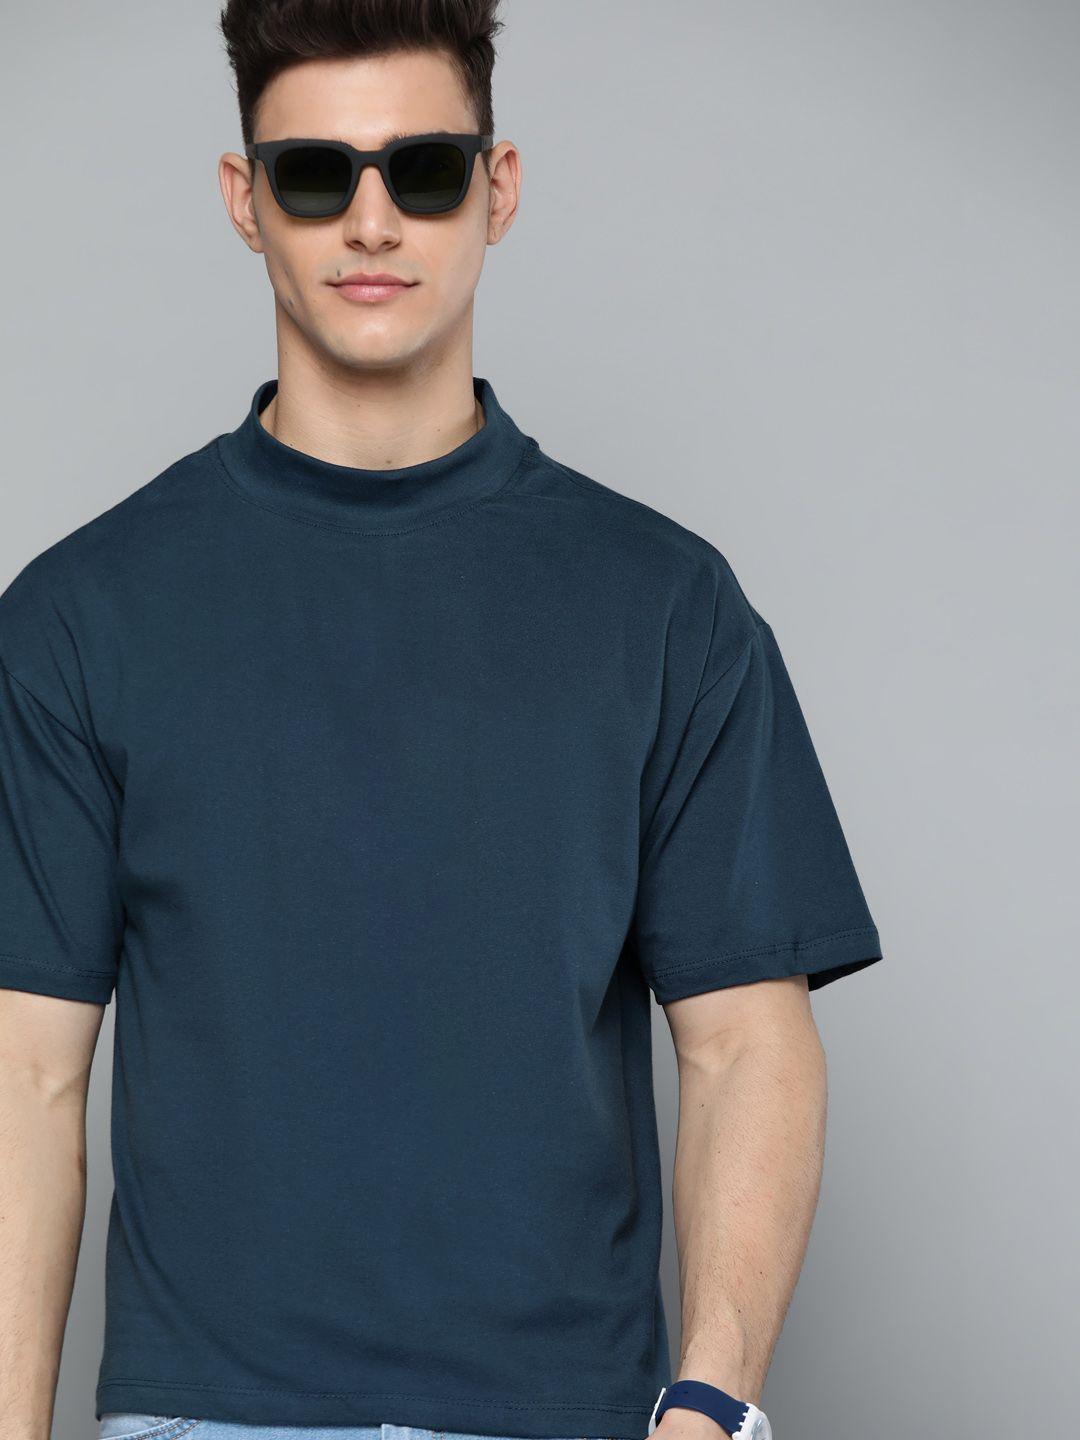 m&h easy men navy blue cotton solid drop-shoulder sleeves t-shirt